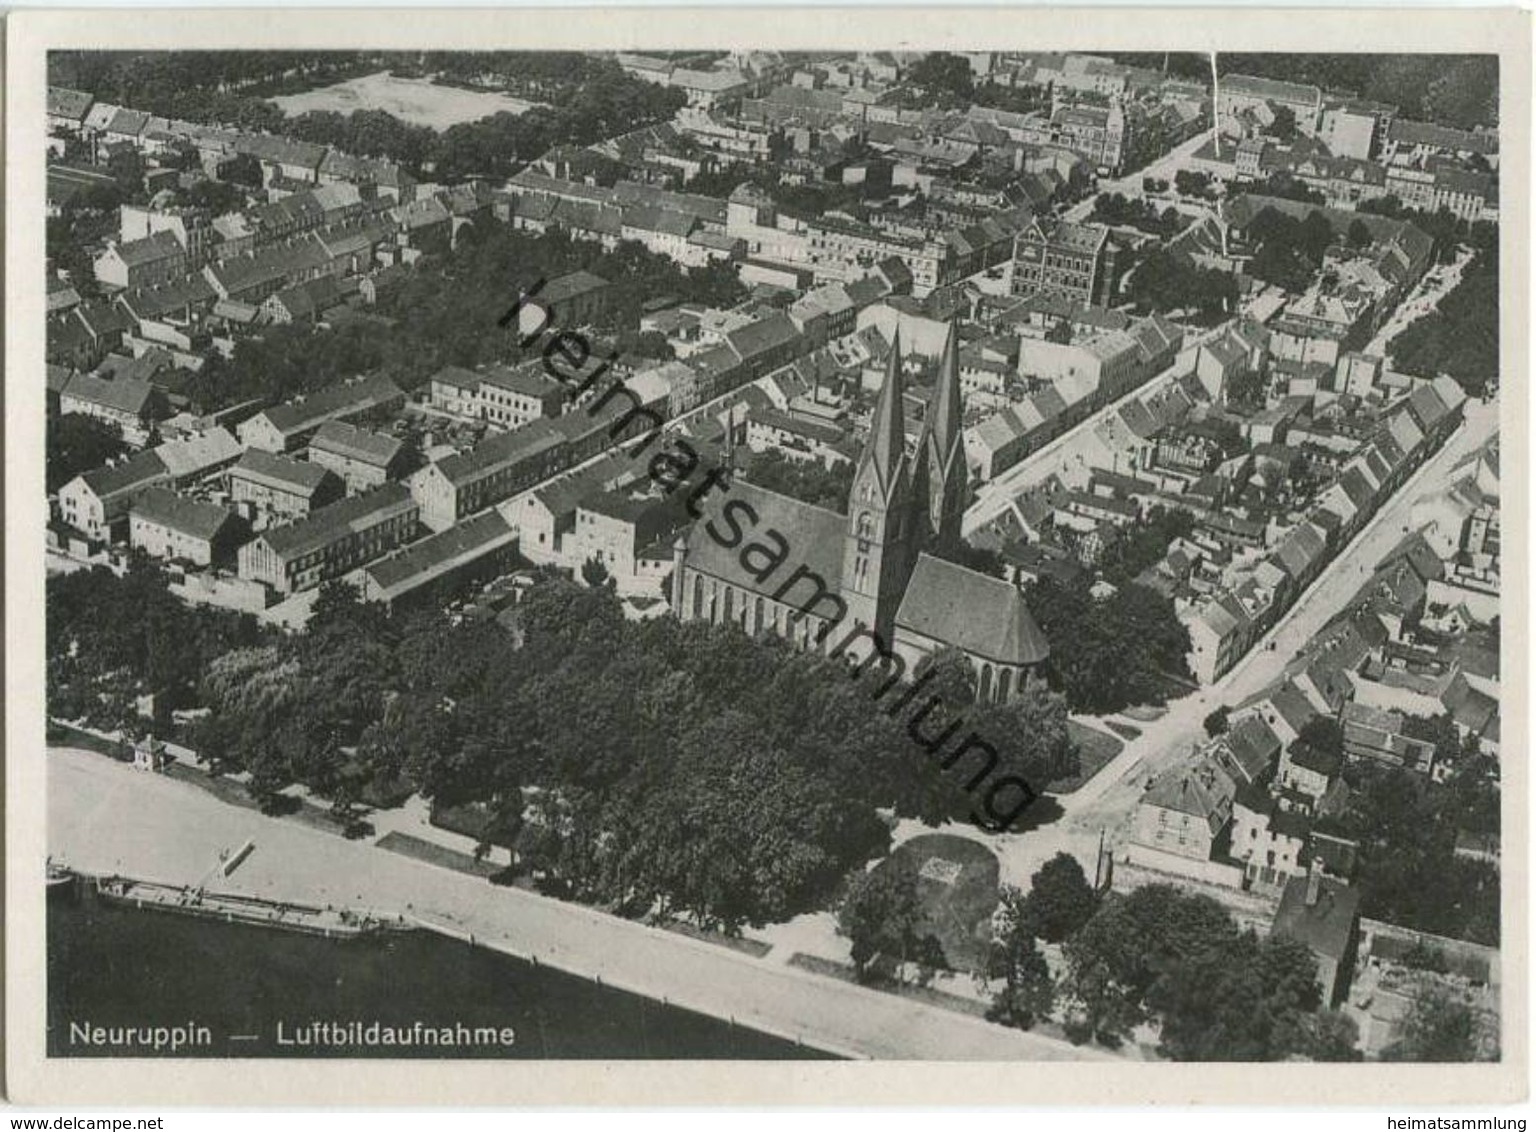 Neuruppin - Luftbildaufnahme - AK Grossformat 30er Jahre - Verlag Böhm-Luftbild - Neuruppin